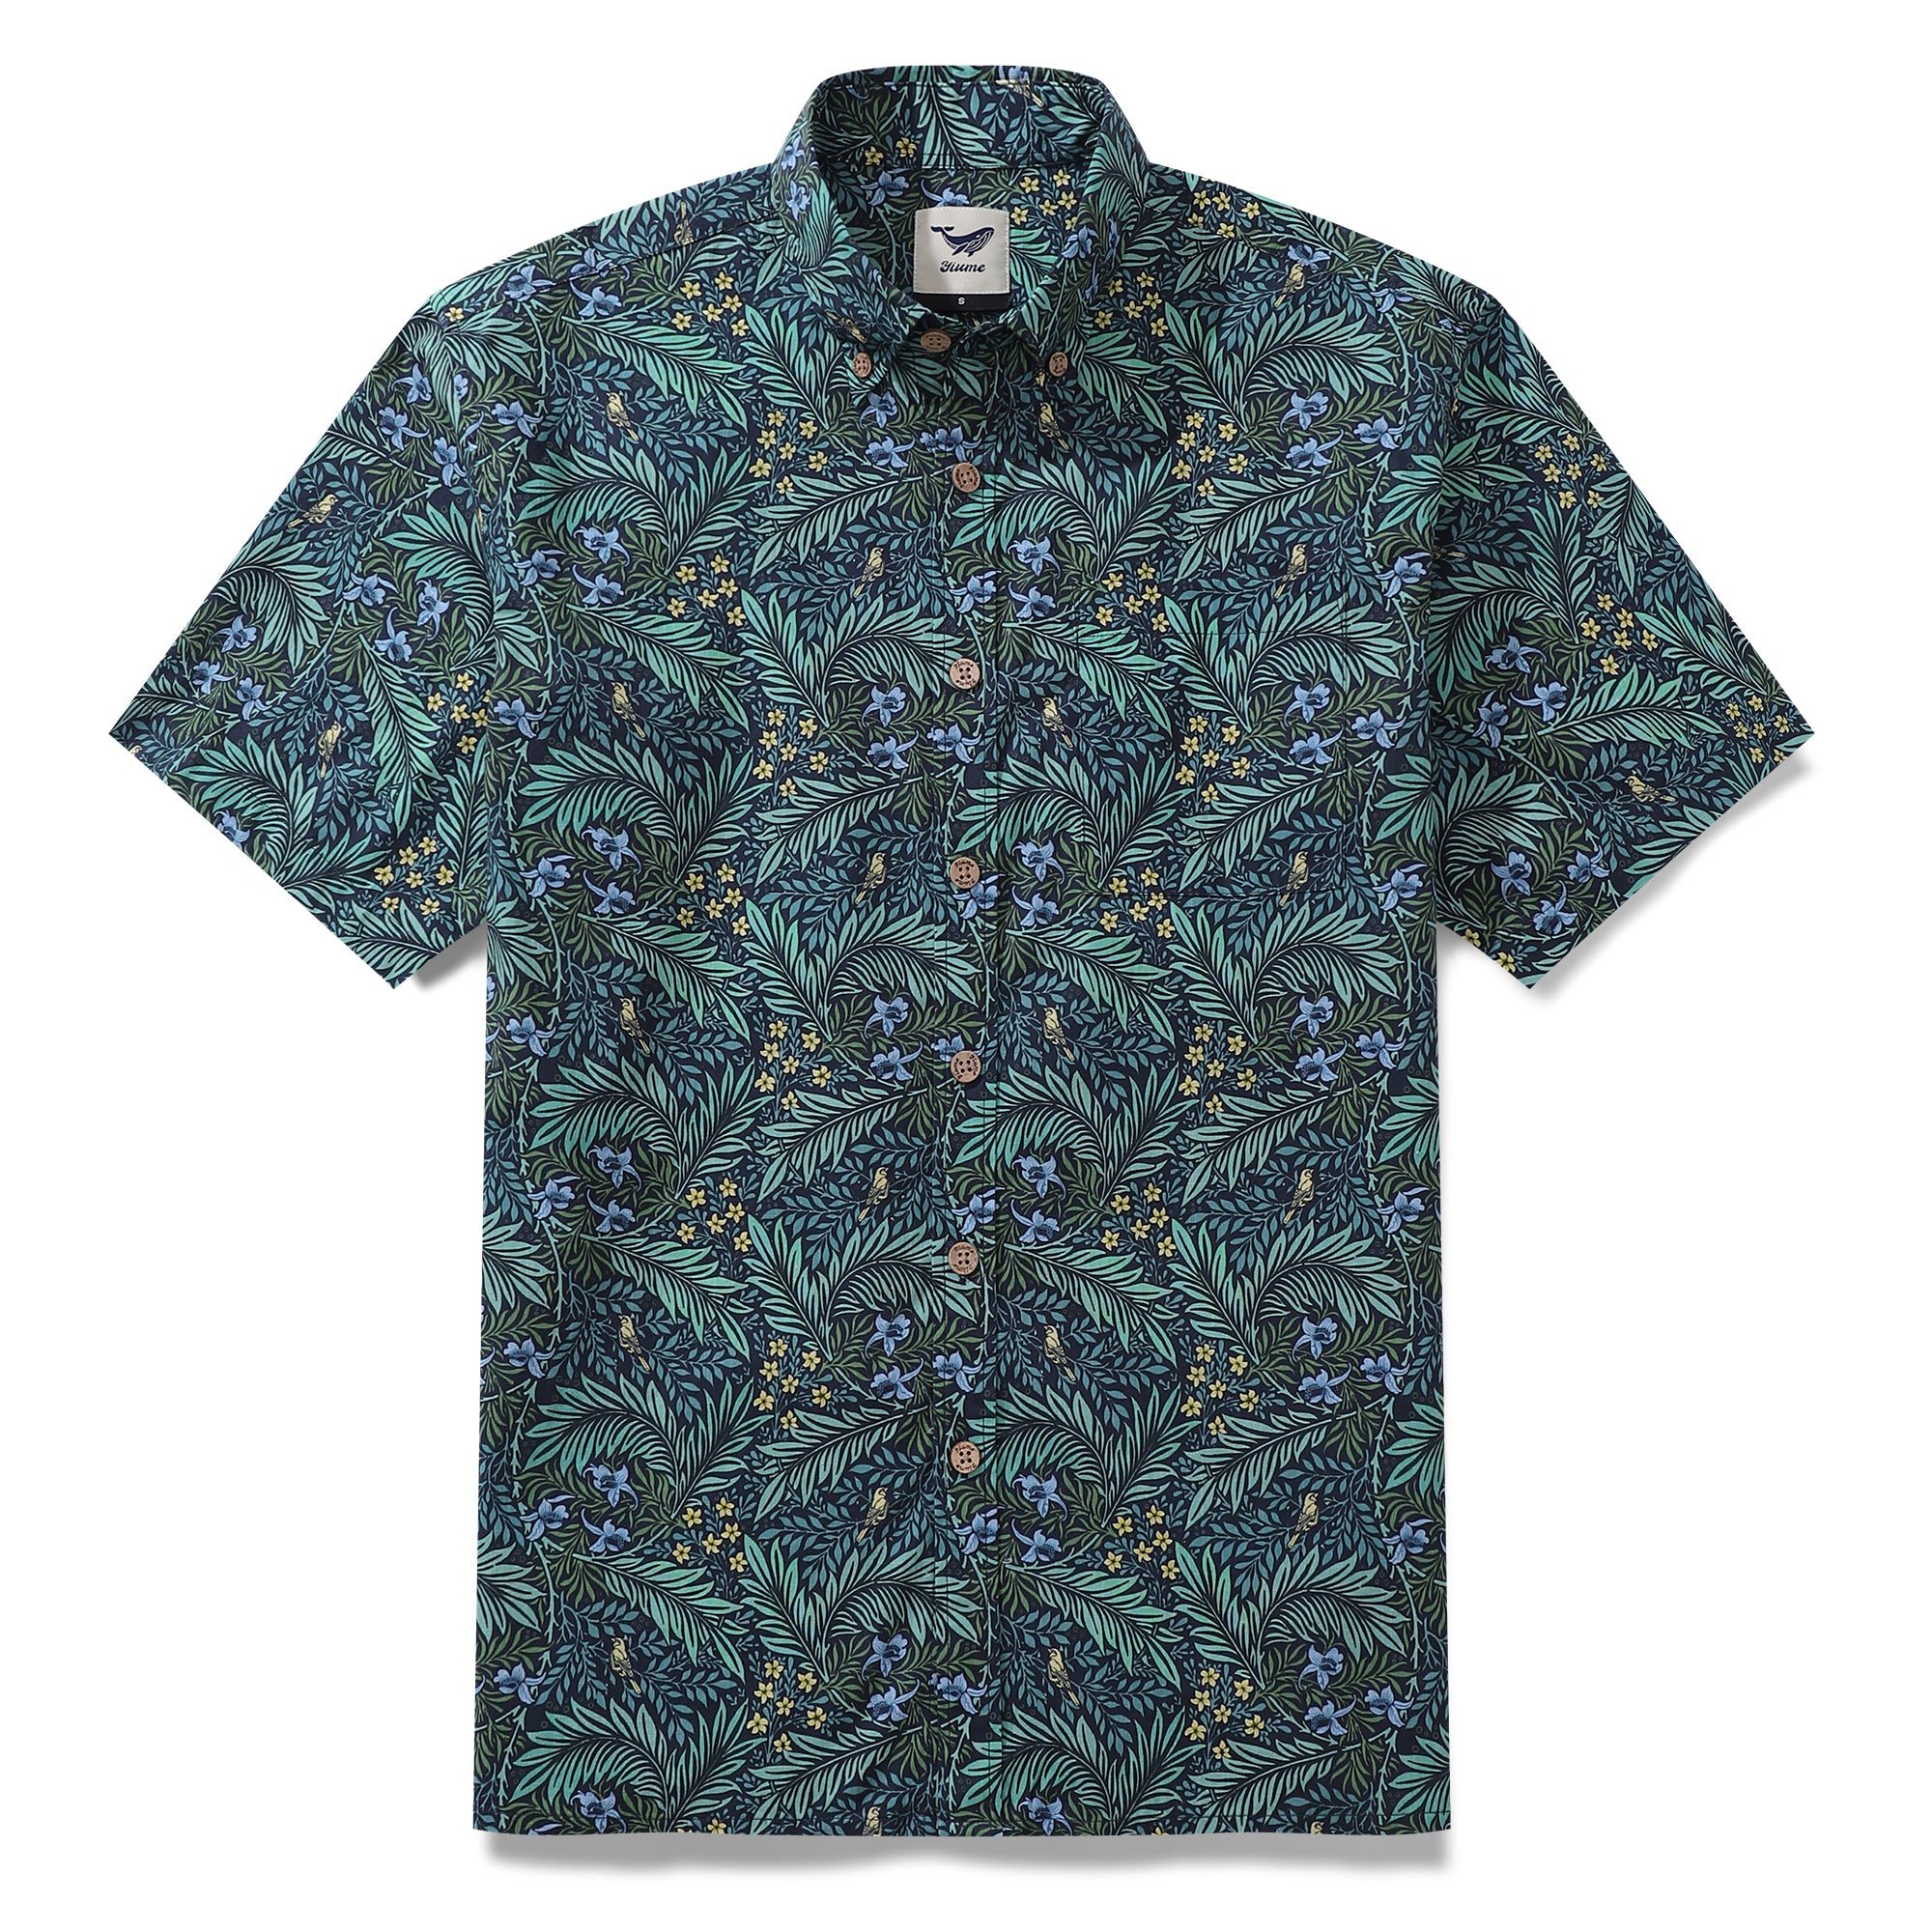 1950s Vintage Hawaiian Shirt For Men Foreat Mist Cotton Button-down Short Sleeve Tropical Aloha Shirt